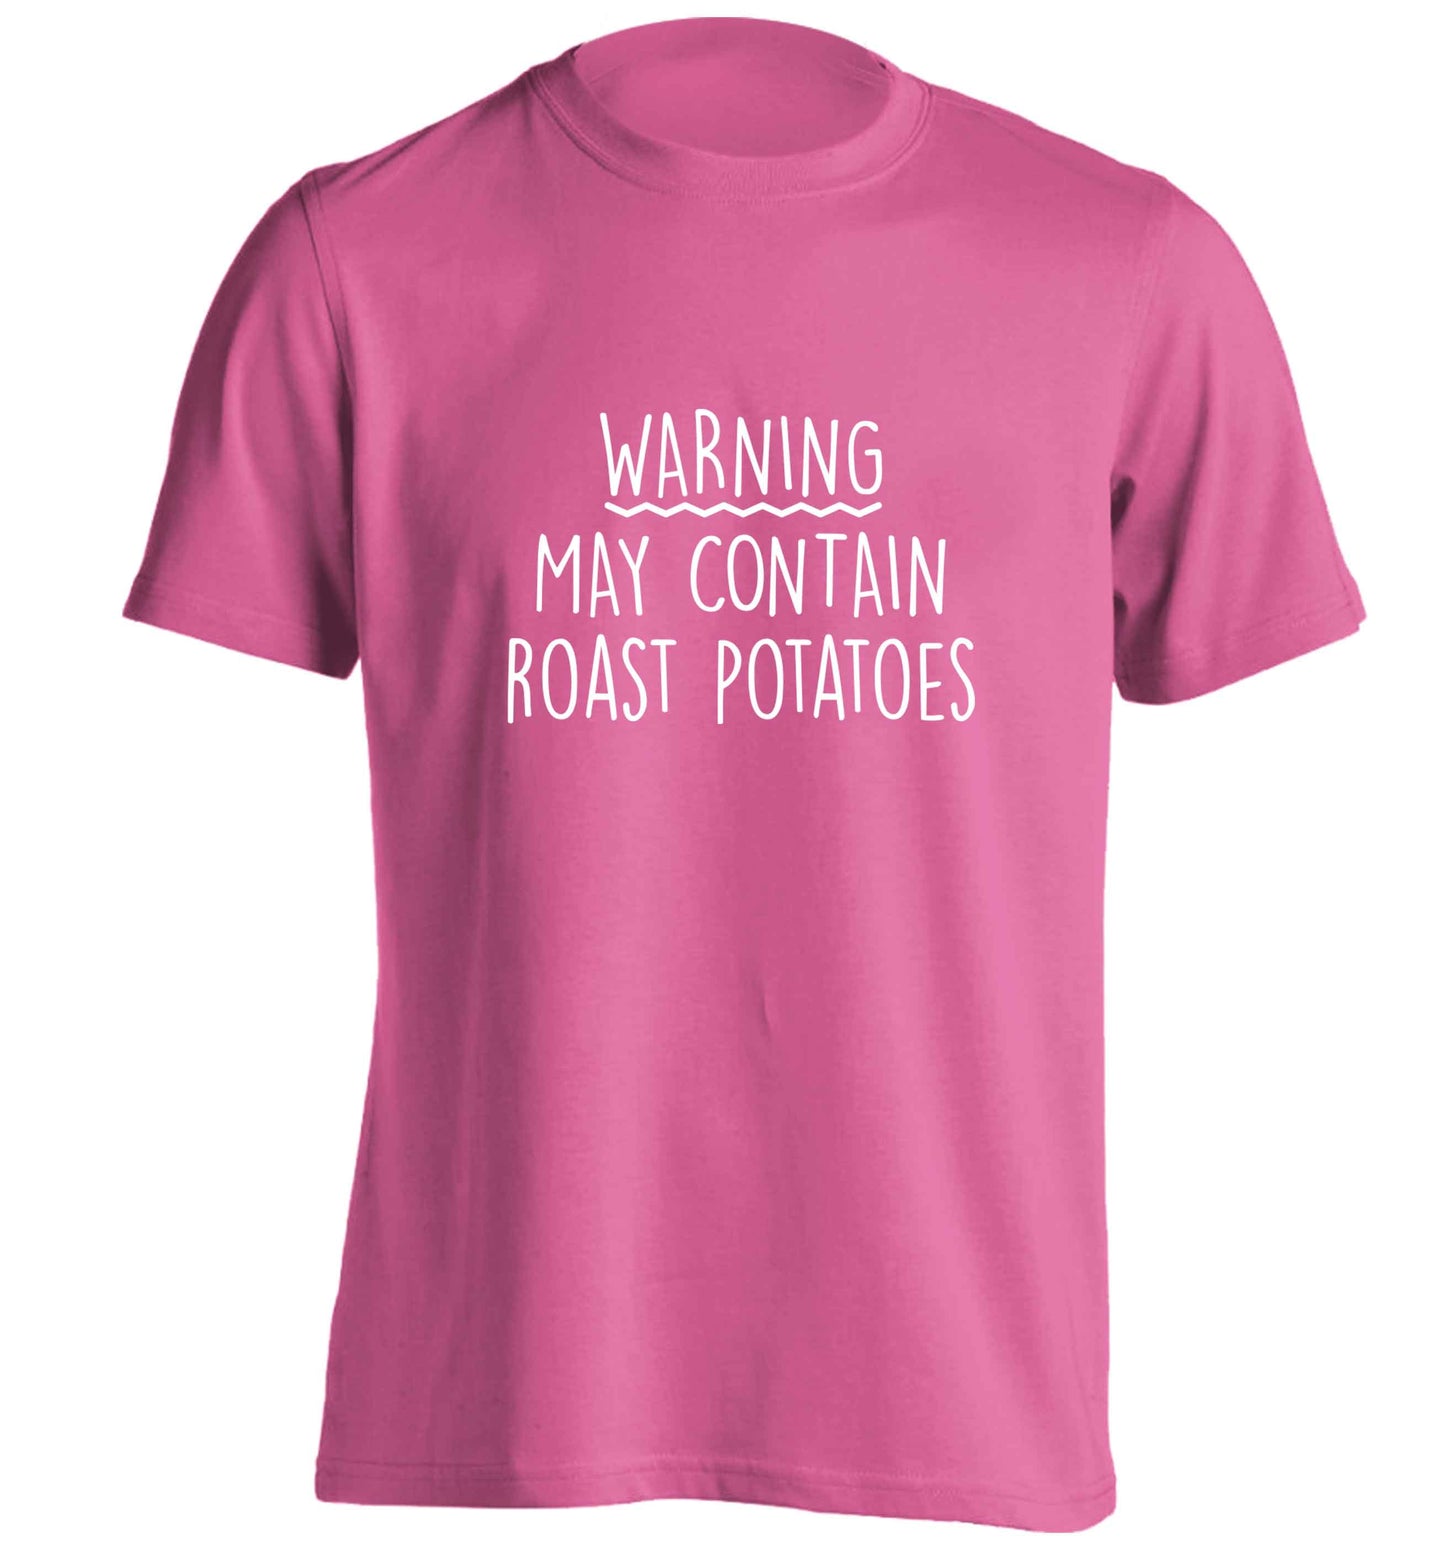 Warning may containg roast potatoes adults unisex pink Tshirt 2XL